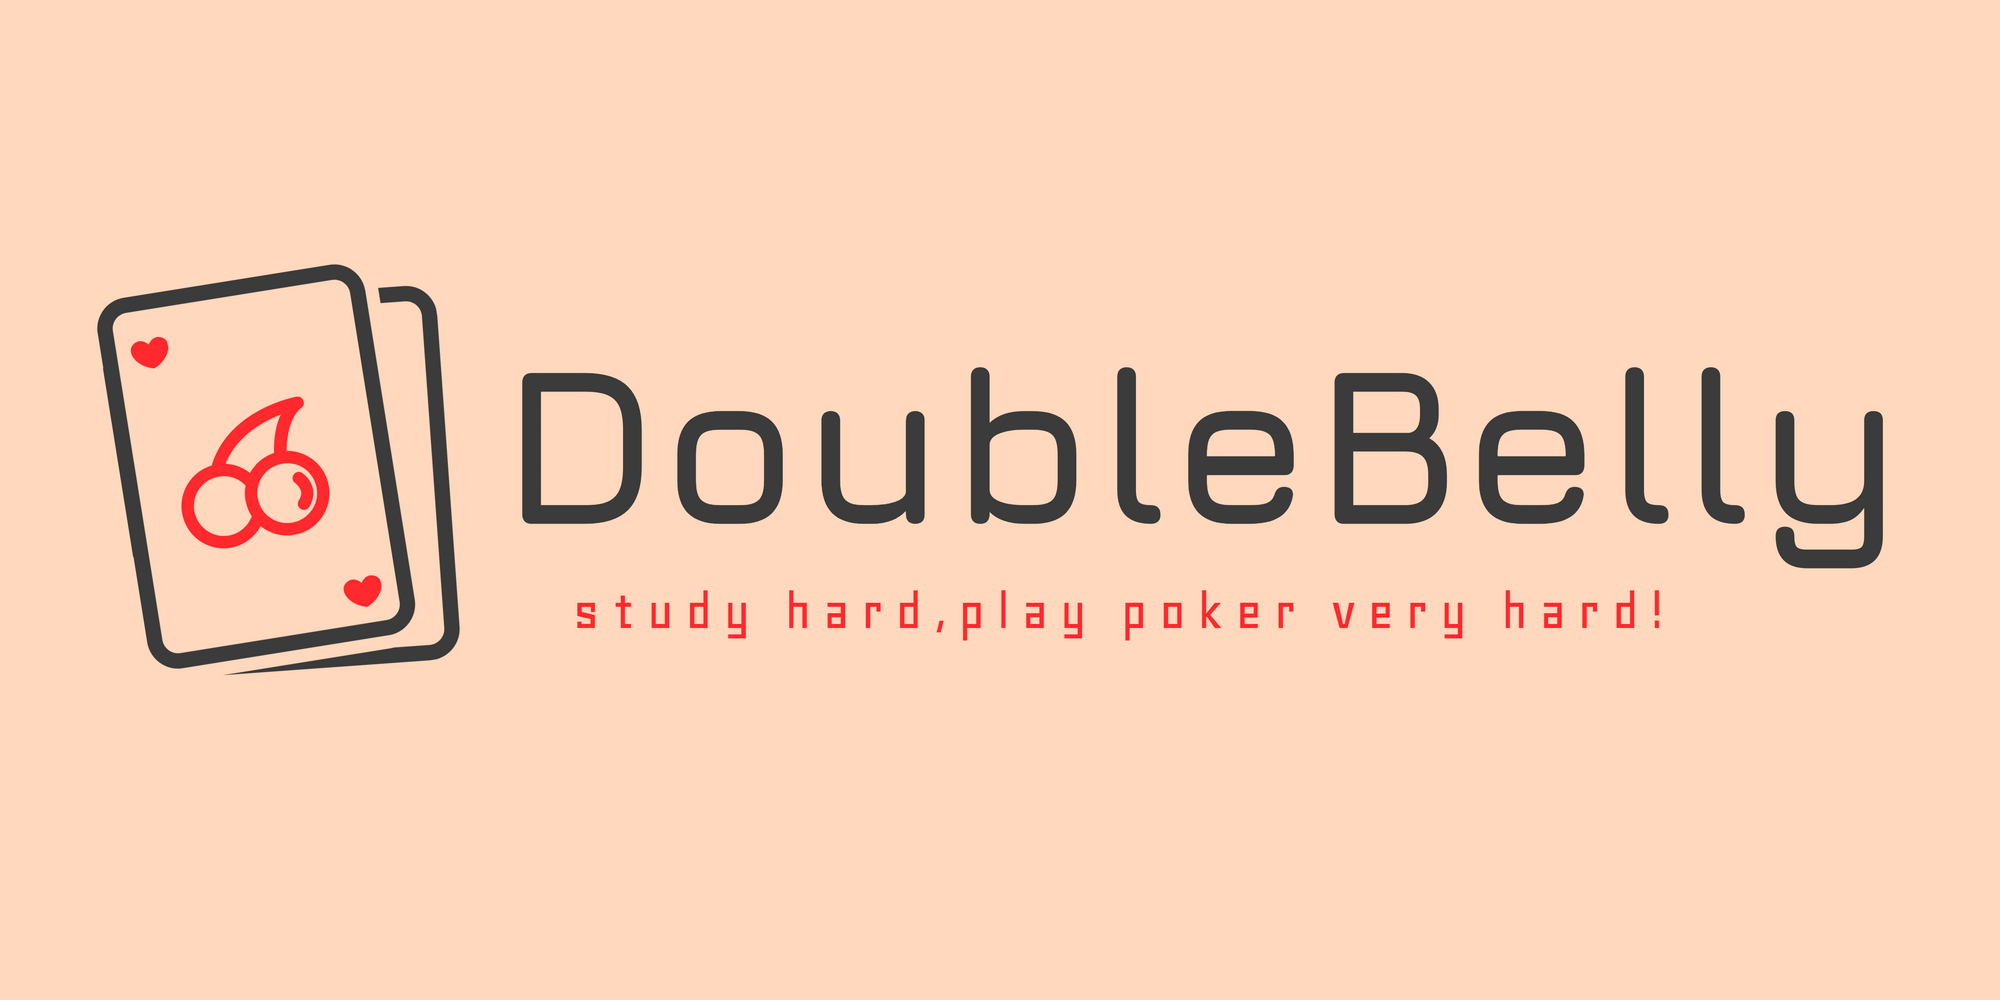 DoubleBelly Amusement Poker&Bar
愛知県豊橋市で人気のポーカーバー、DoubleBellyです